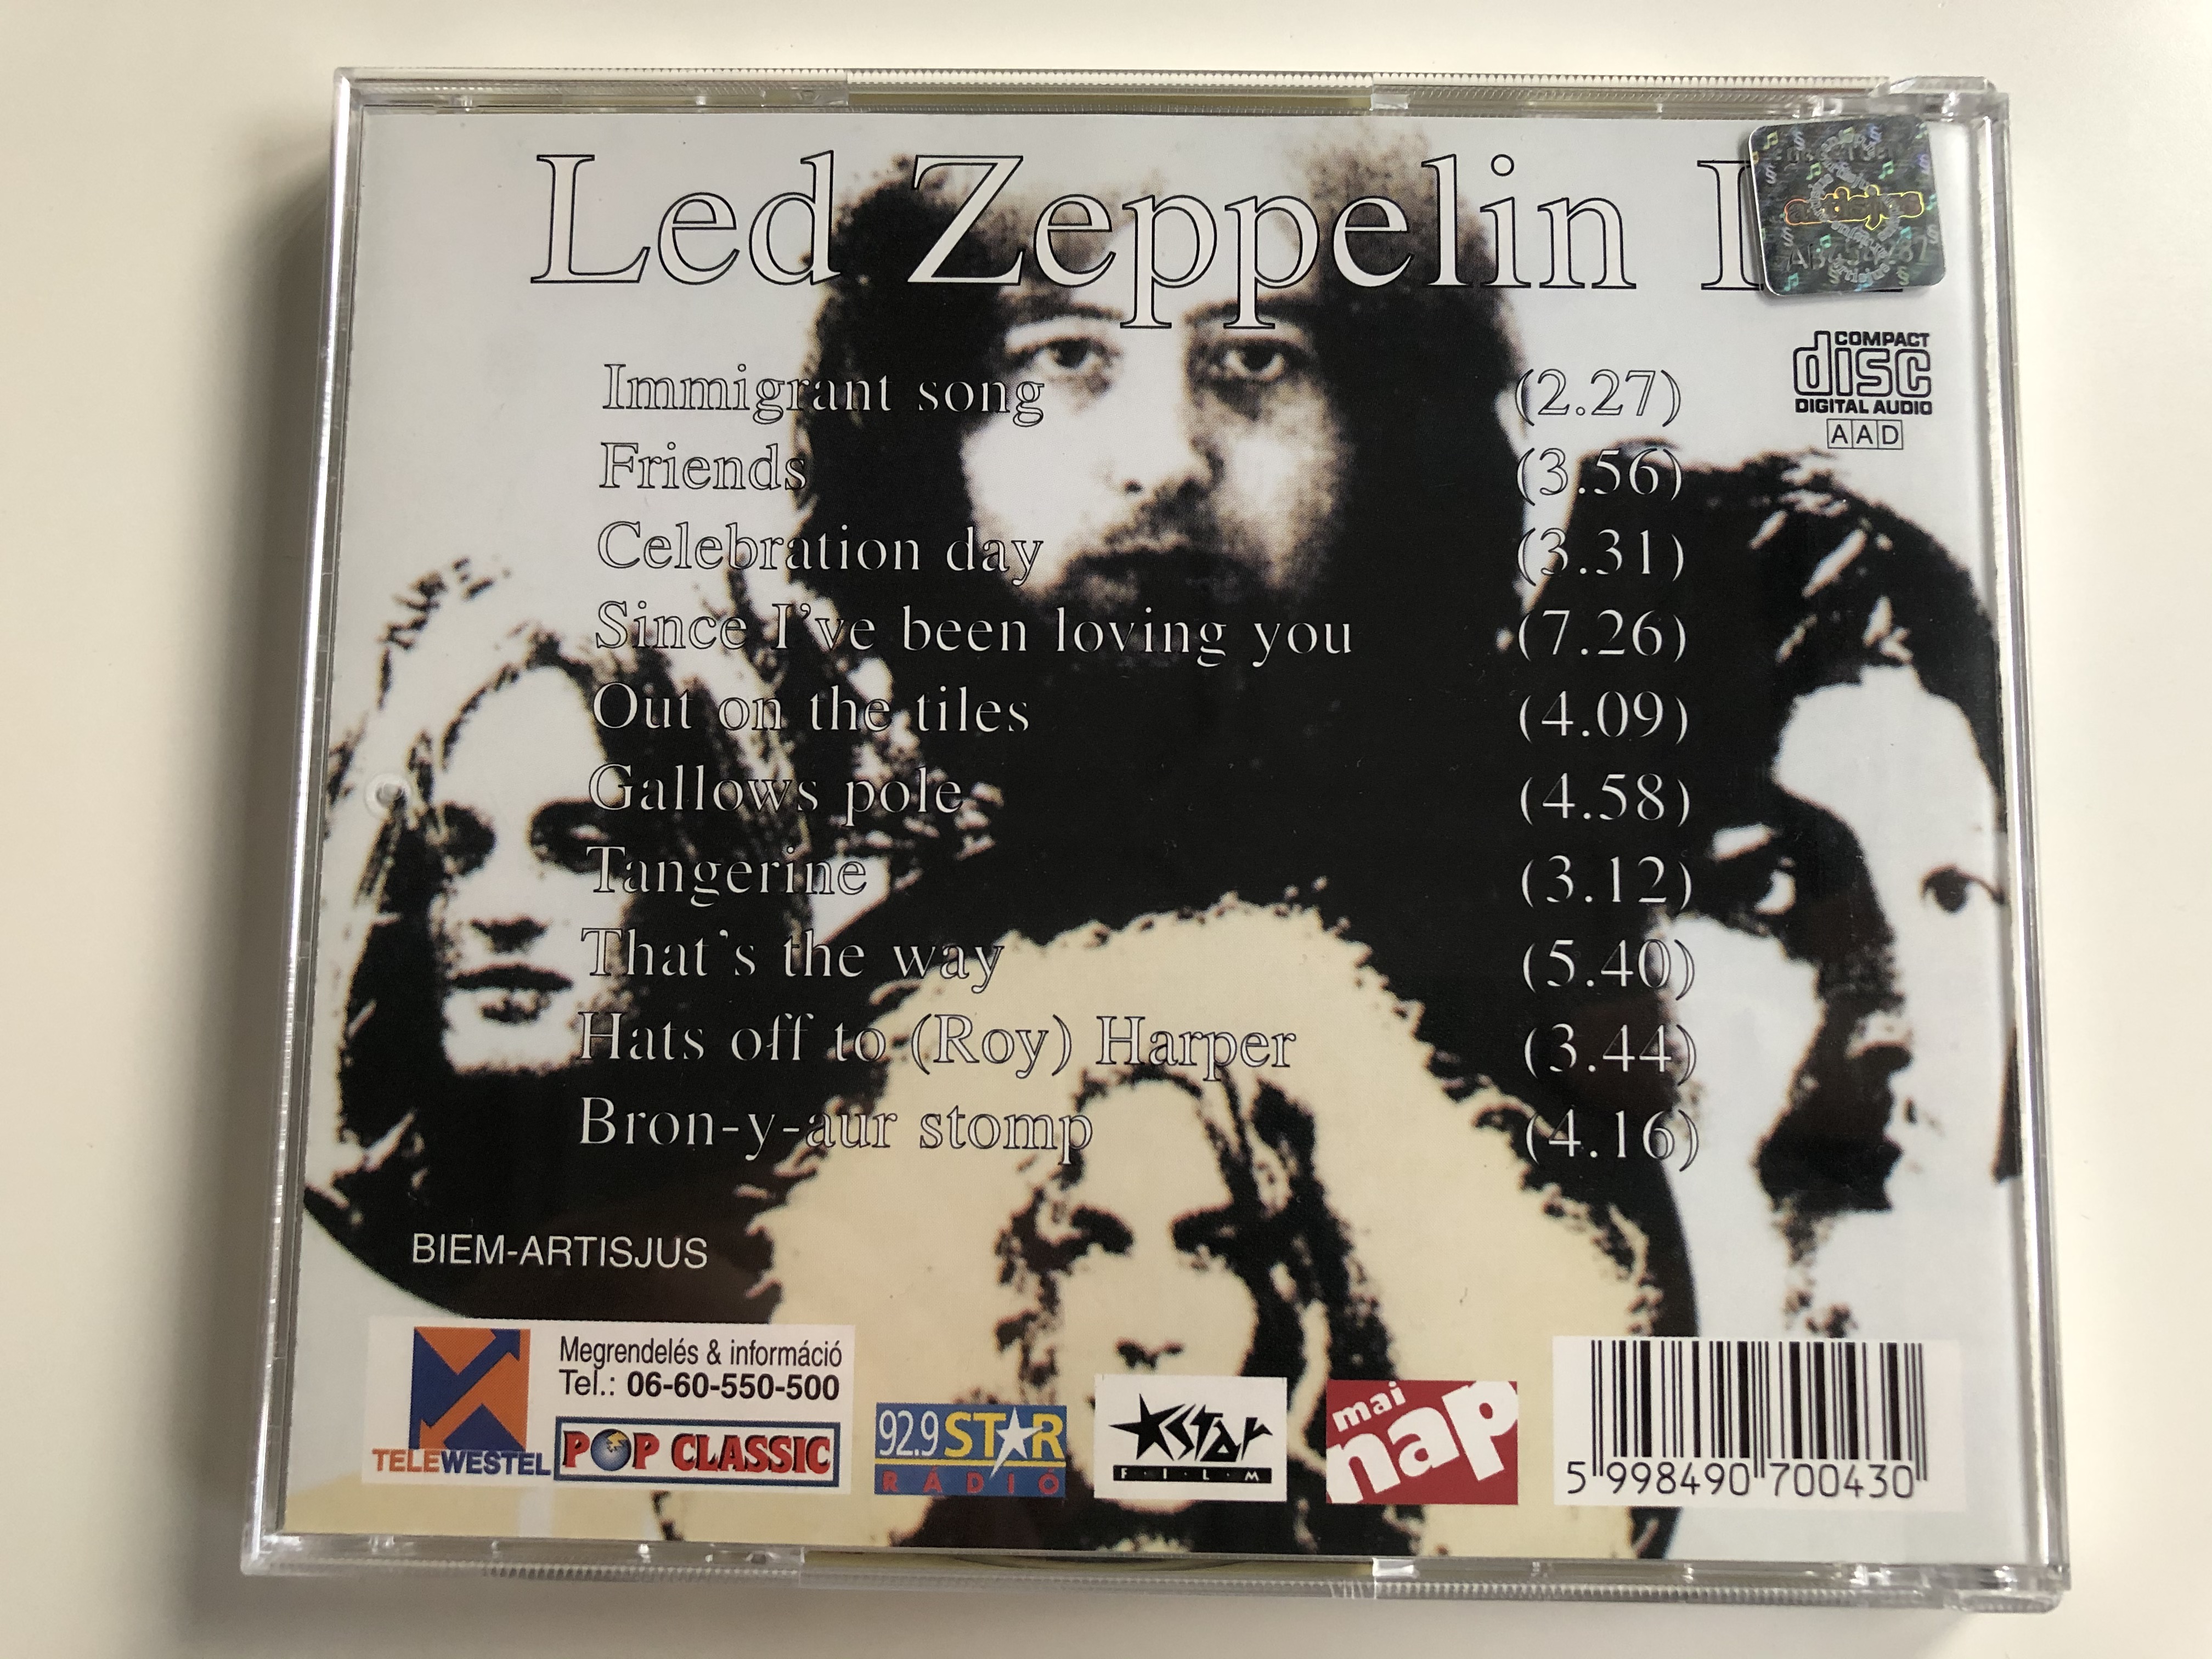 led-zeppelin-iii-pop-classic-euroton-audio-cd-eucd-0043-4-.jpg